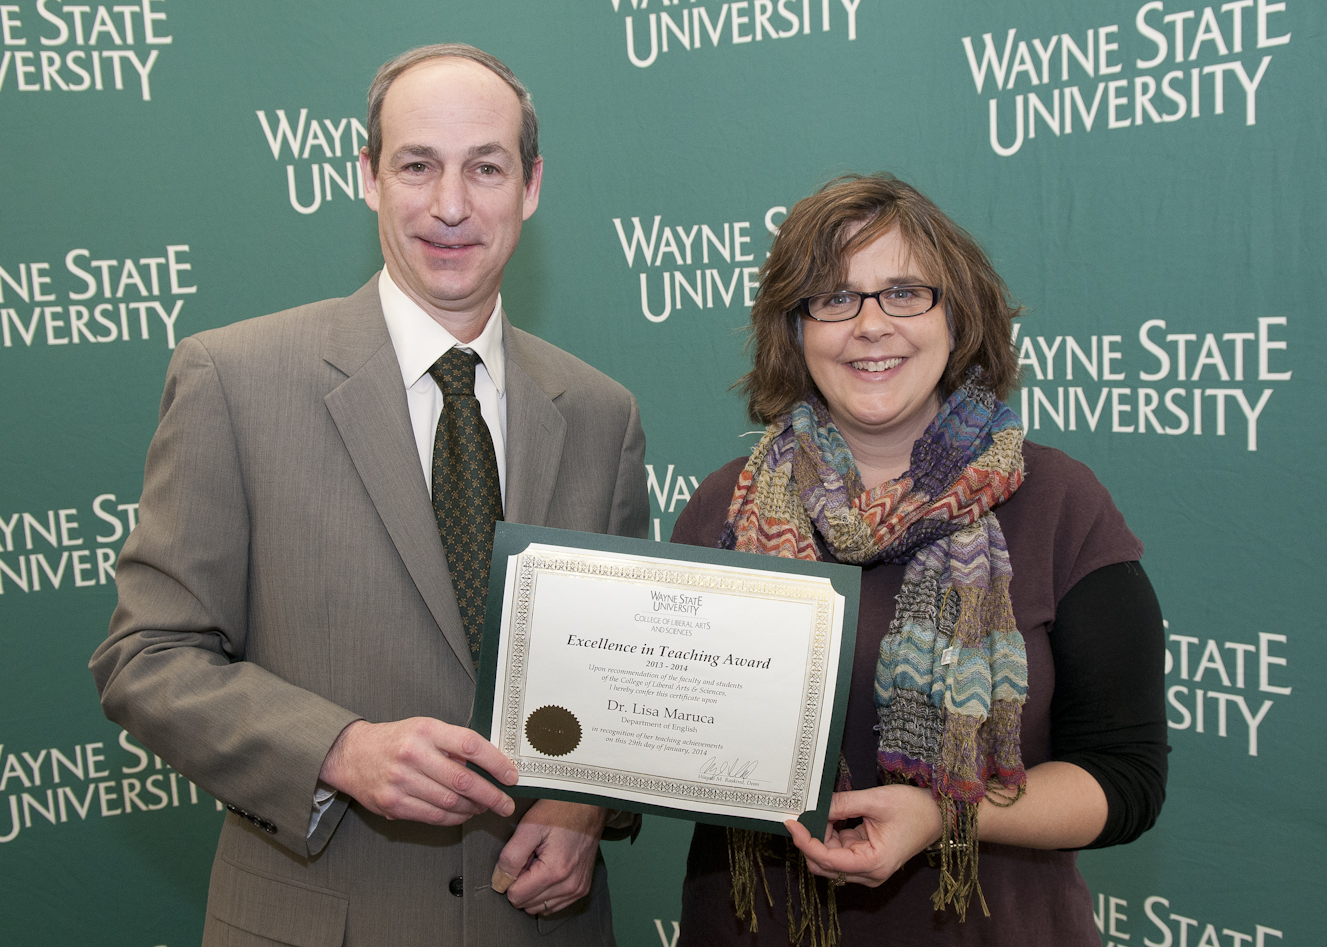 Dean Wayne Raskind and Associate Professor Lisa Maruca